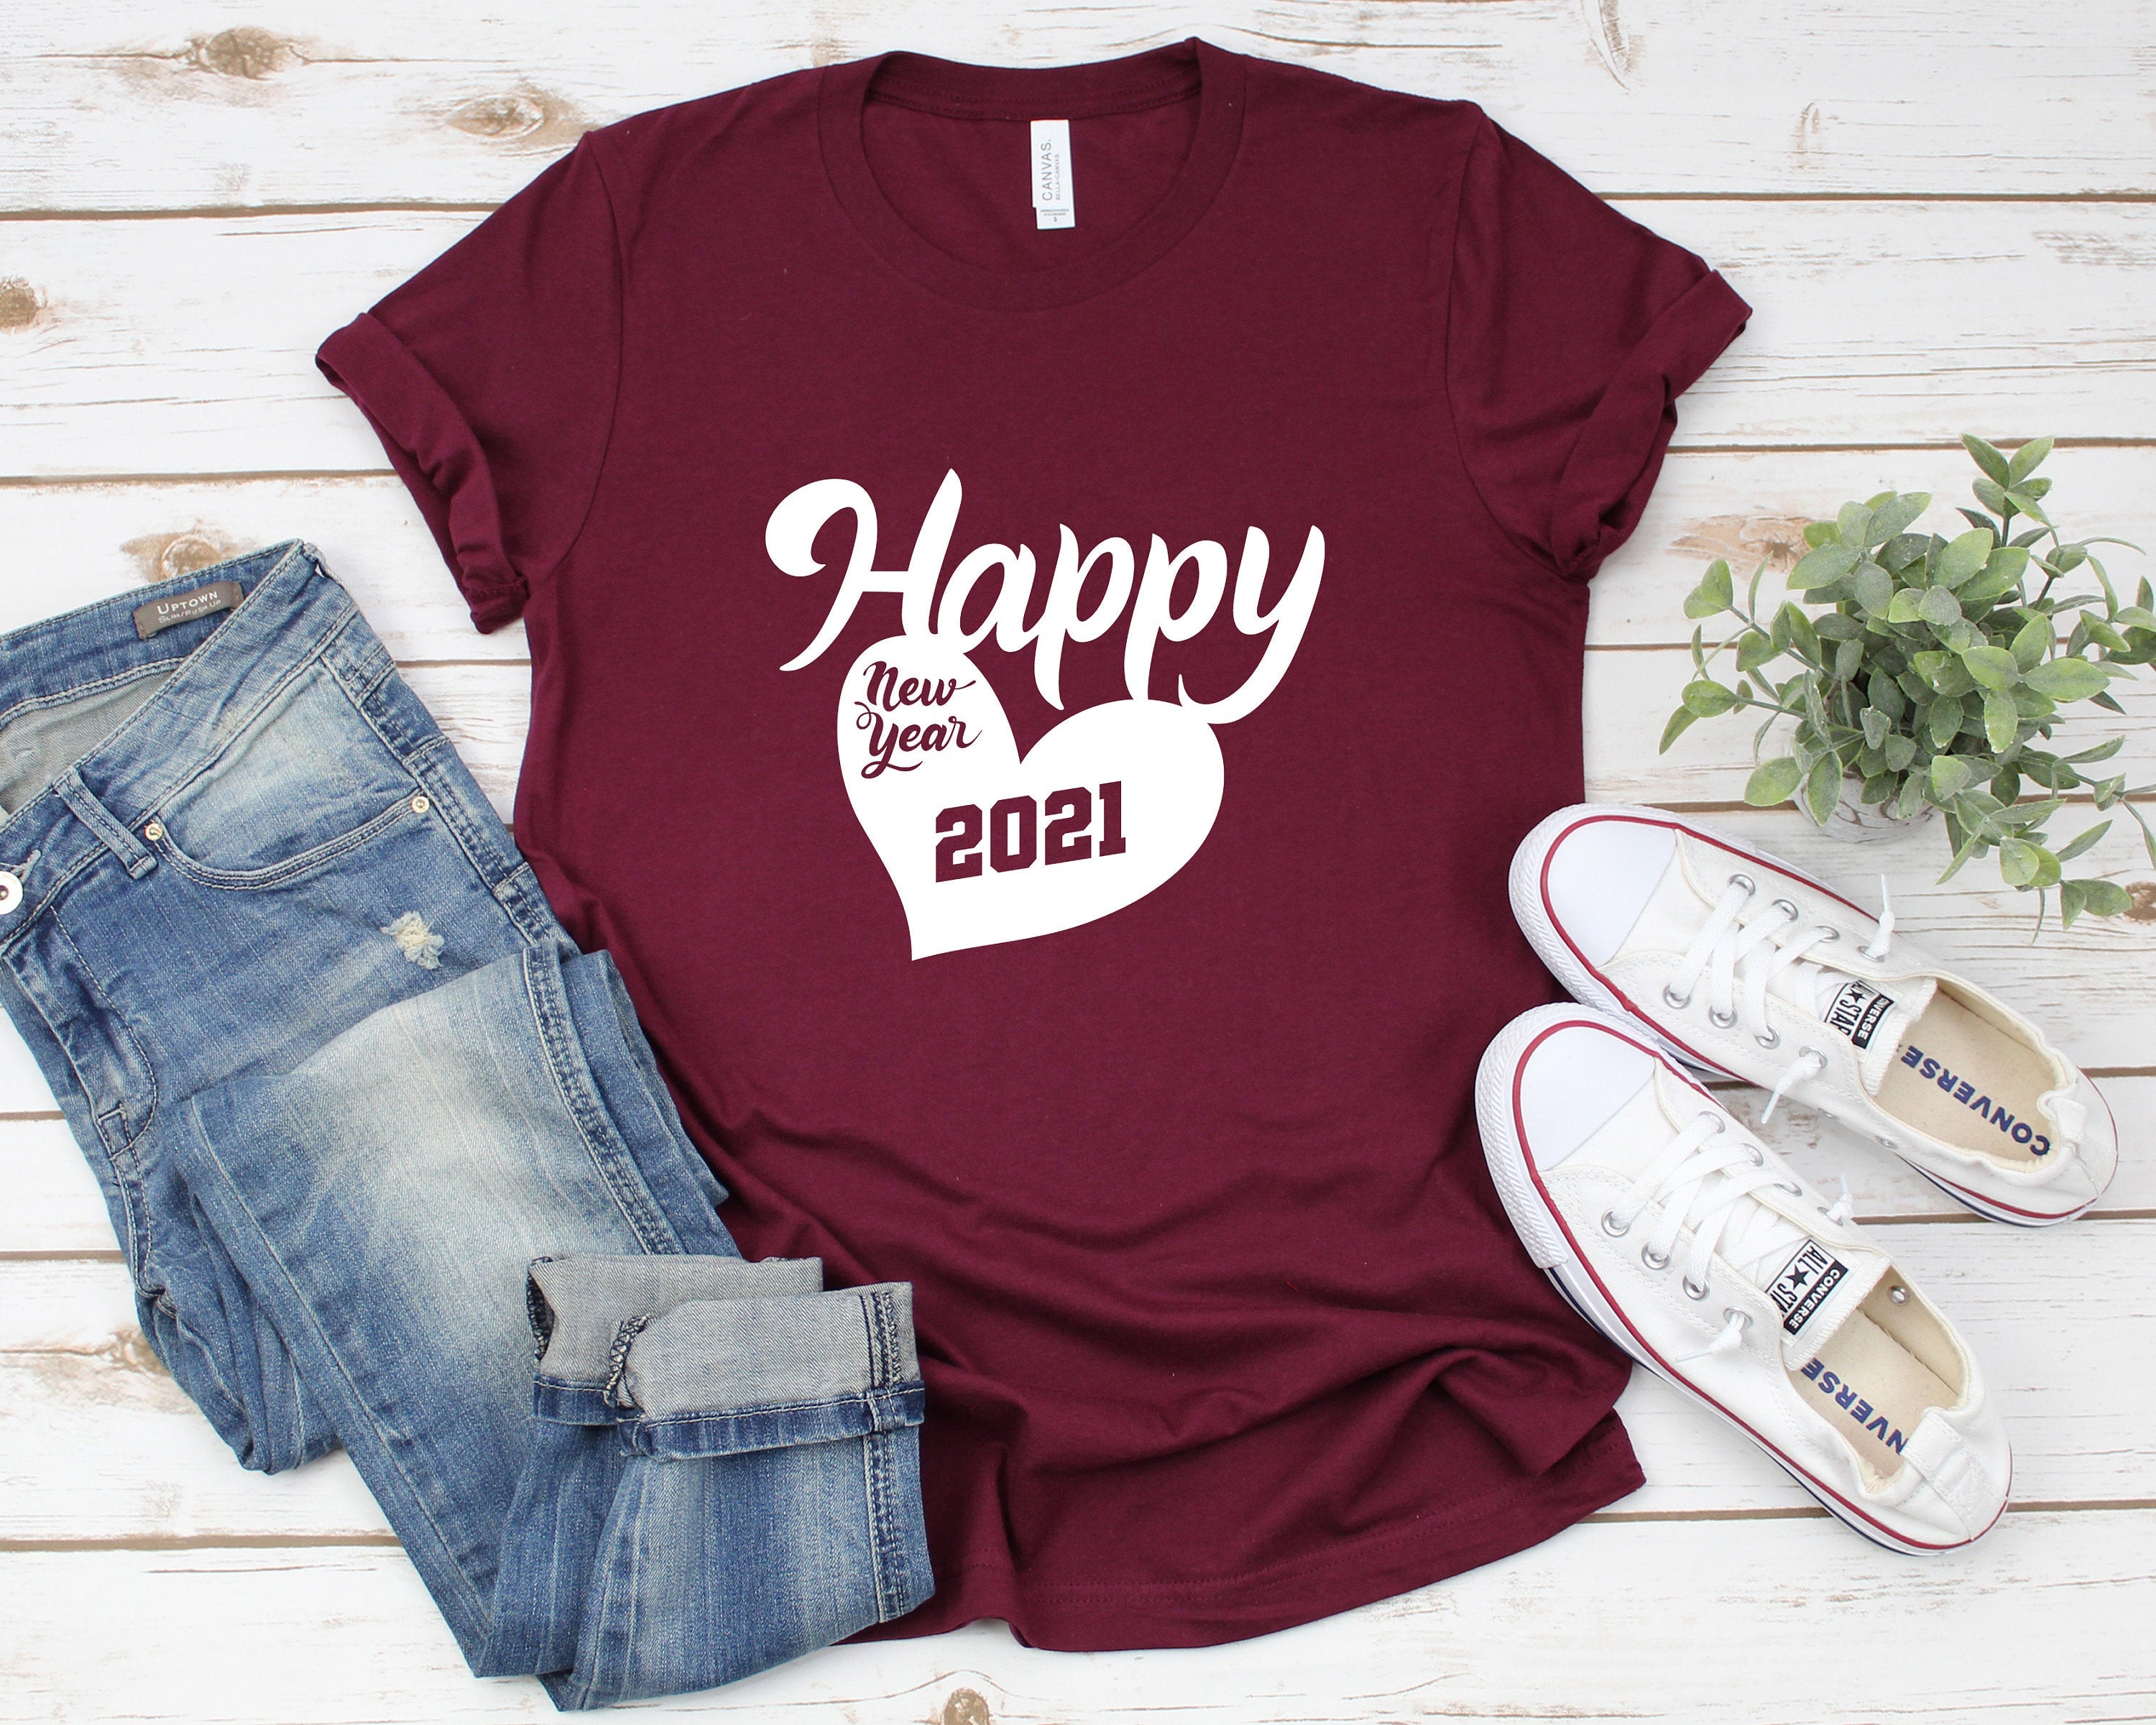 Happy New Year 2021 Shirts, Cute New Years Shirt, New Years Eve Shirt, 2021 Party Shirt, Funny Christmas Shirts, Family New Year Shirts